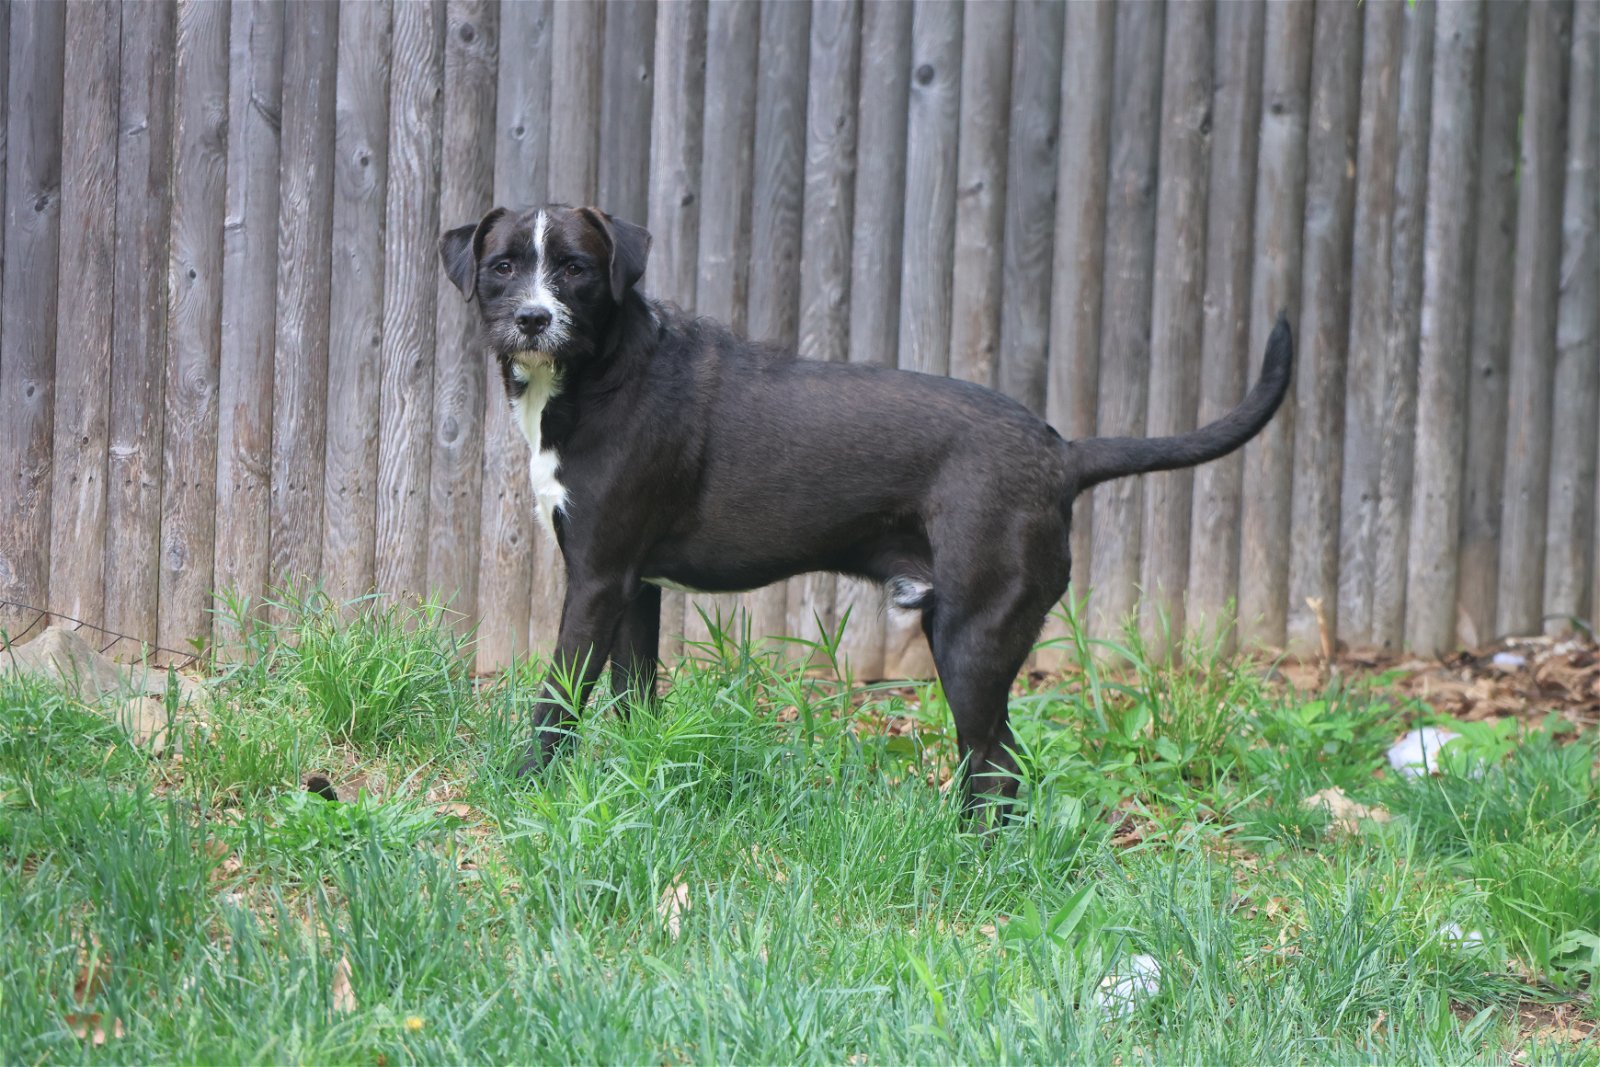 Mr. Man - $250, an adoptable Schnauzer, Terrier in Sebec, ME, 04481 | Photo Image 2